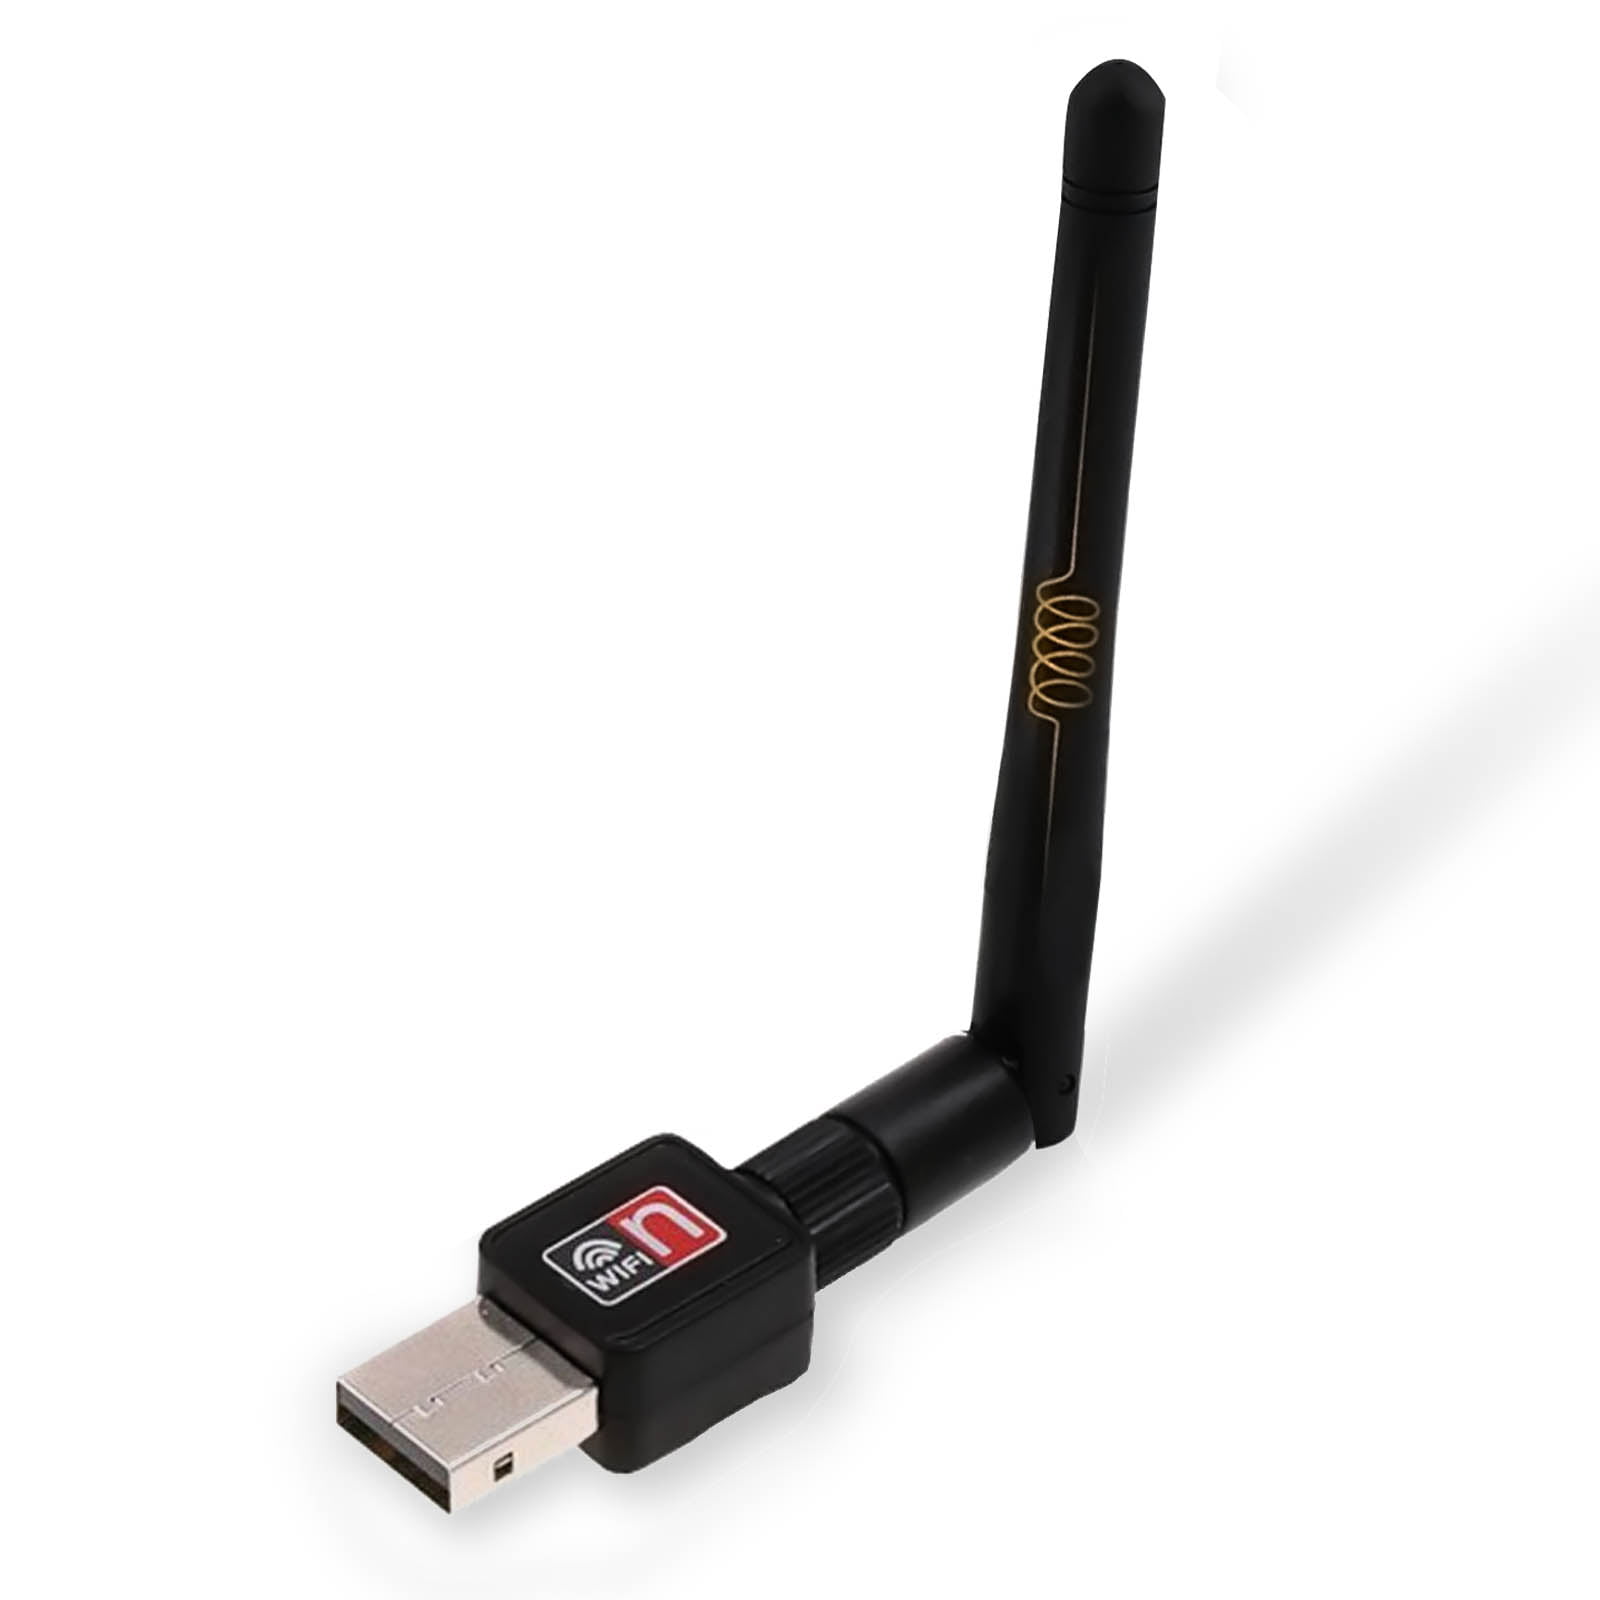 USB WiFi Adapter 2.4G 150Mbps Dongle Wireless Network Adapter Support IEEE 802.11b/g/n LAN Card w/Antenna - Walmart.com